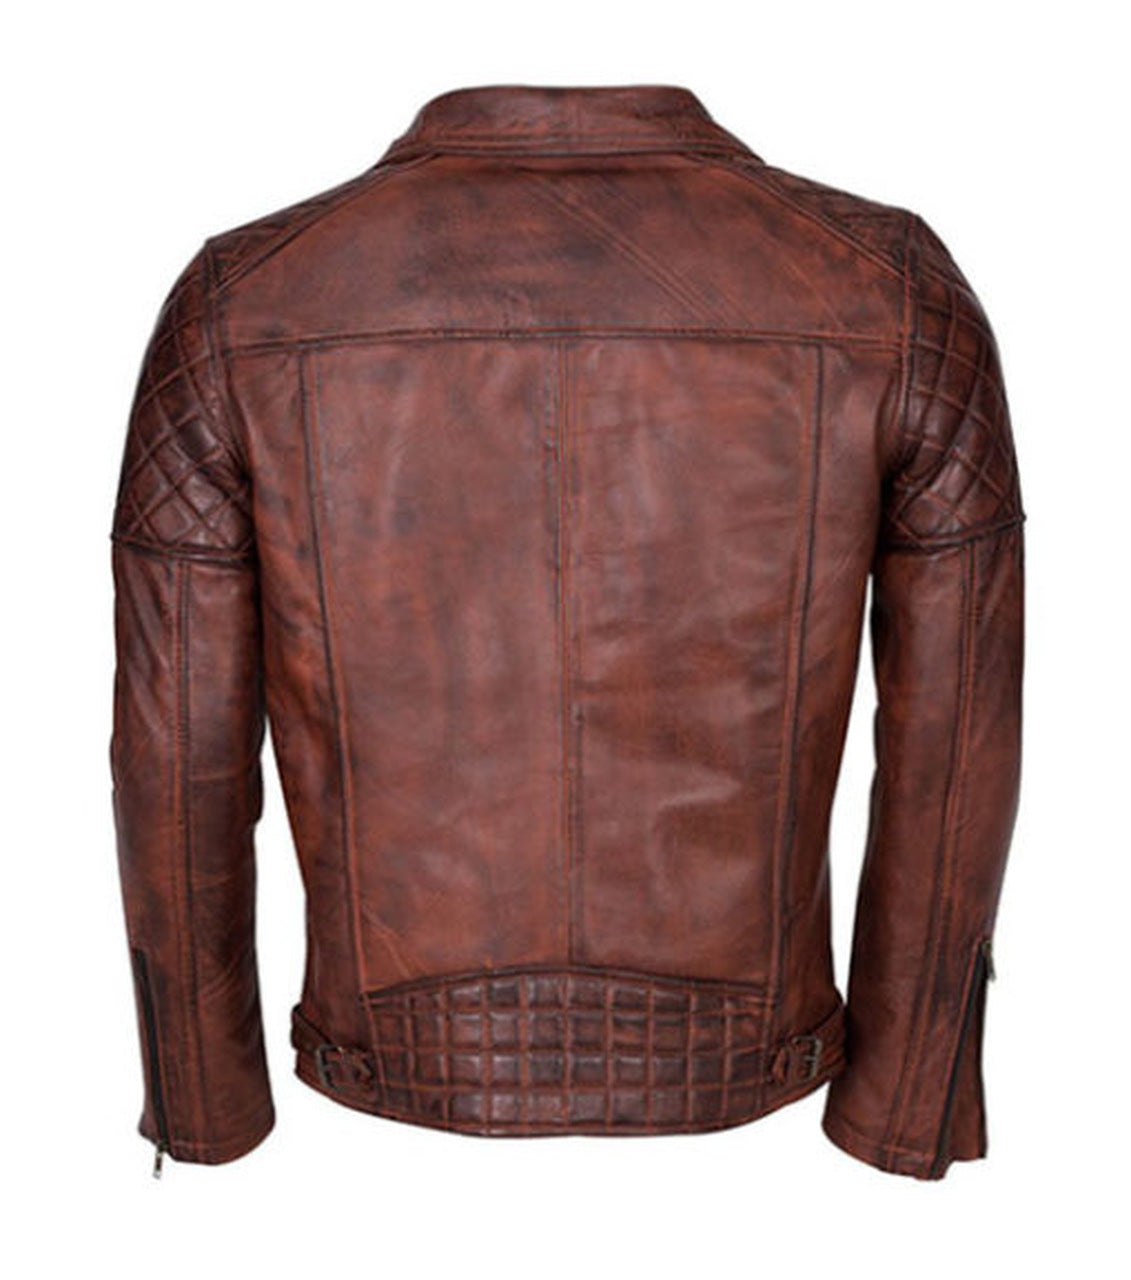 Biker Style Genuine Leather Jacket With Uper Pocket In Dark Brown Colour